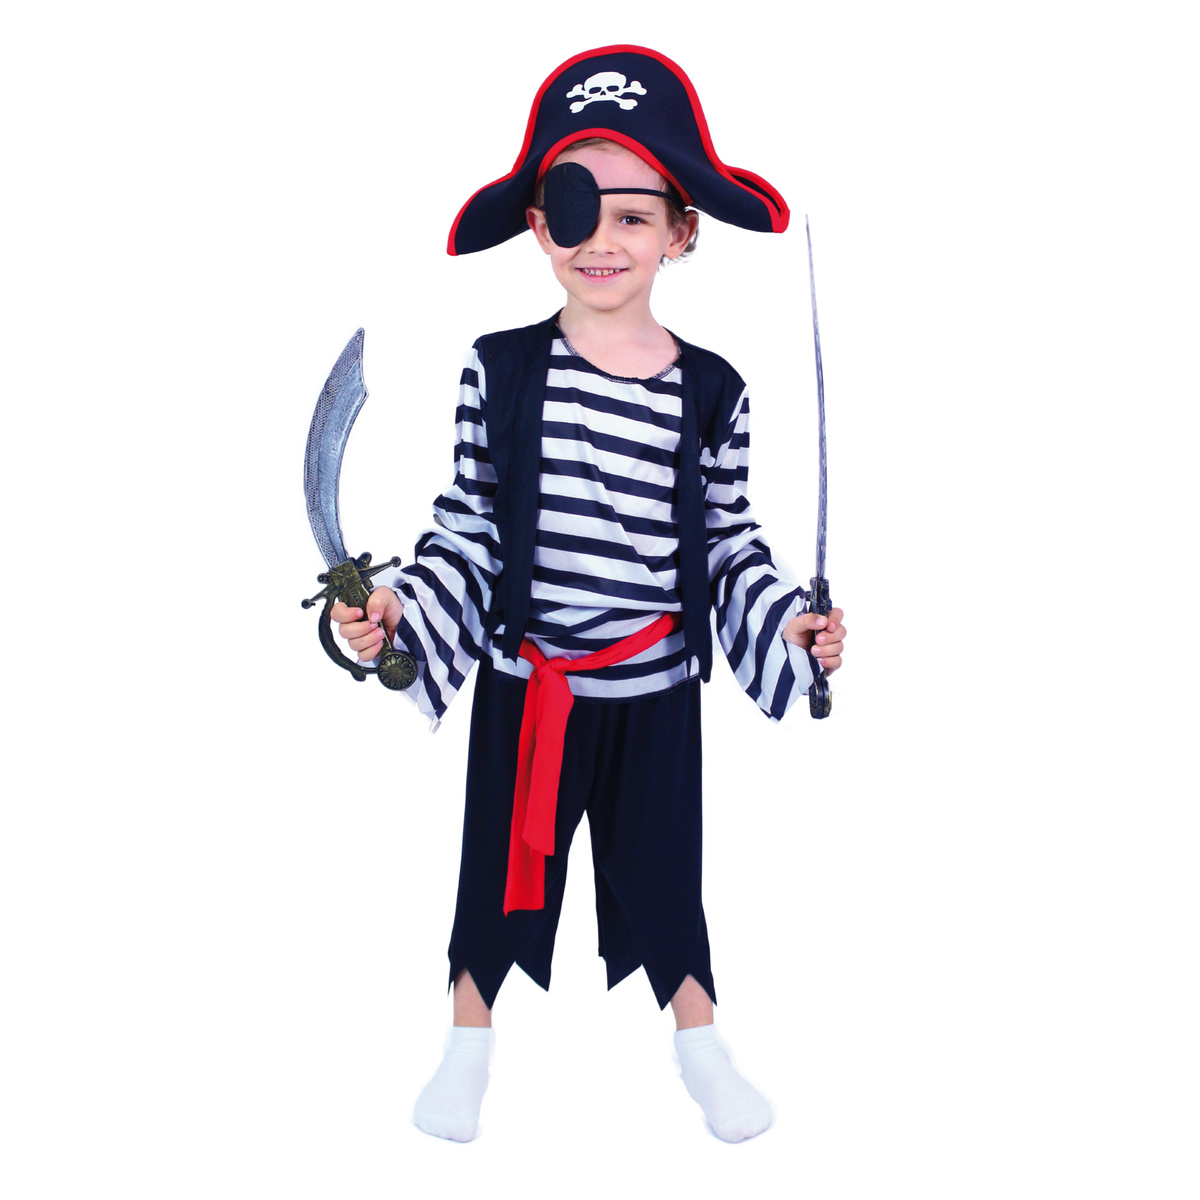 Rappa Dětský kostým Pirát, vel. M